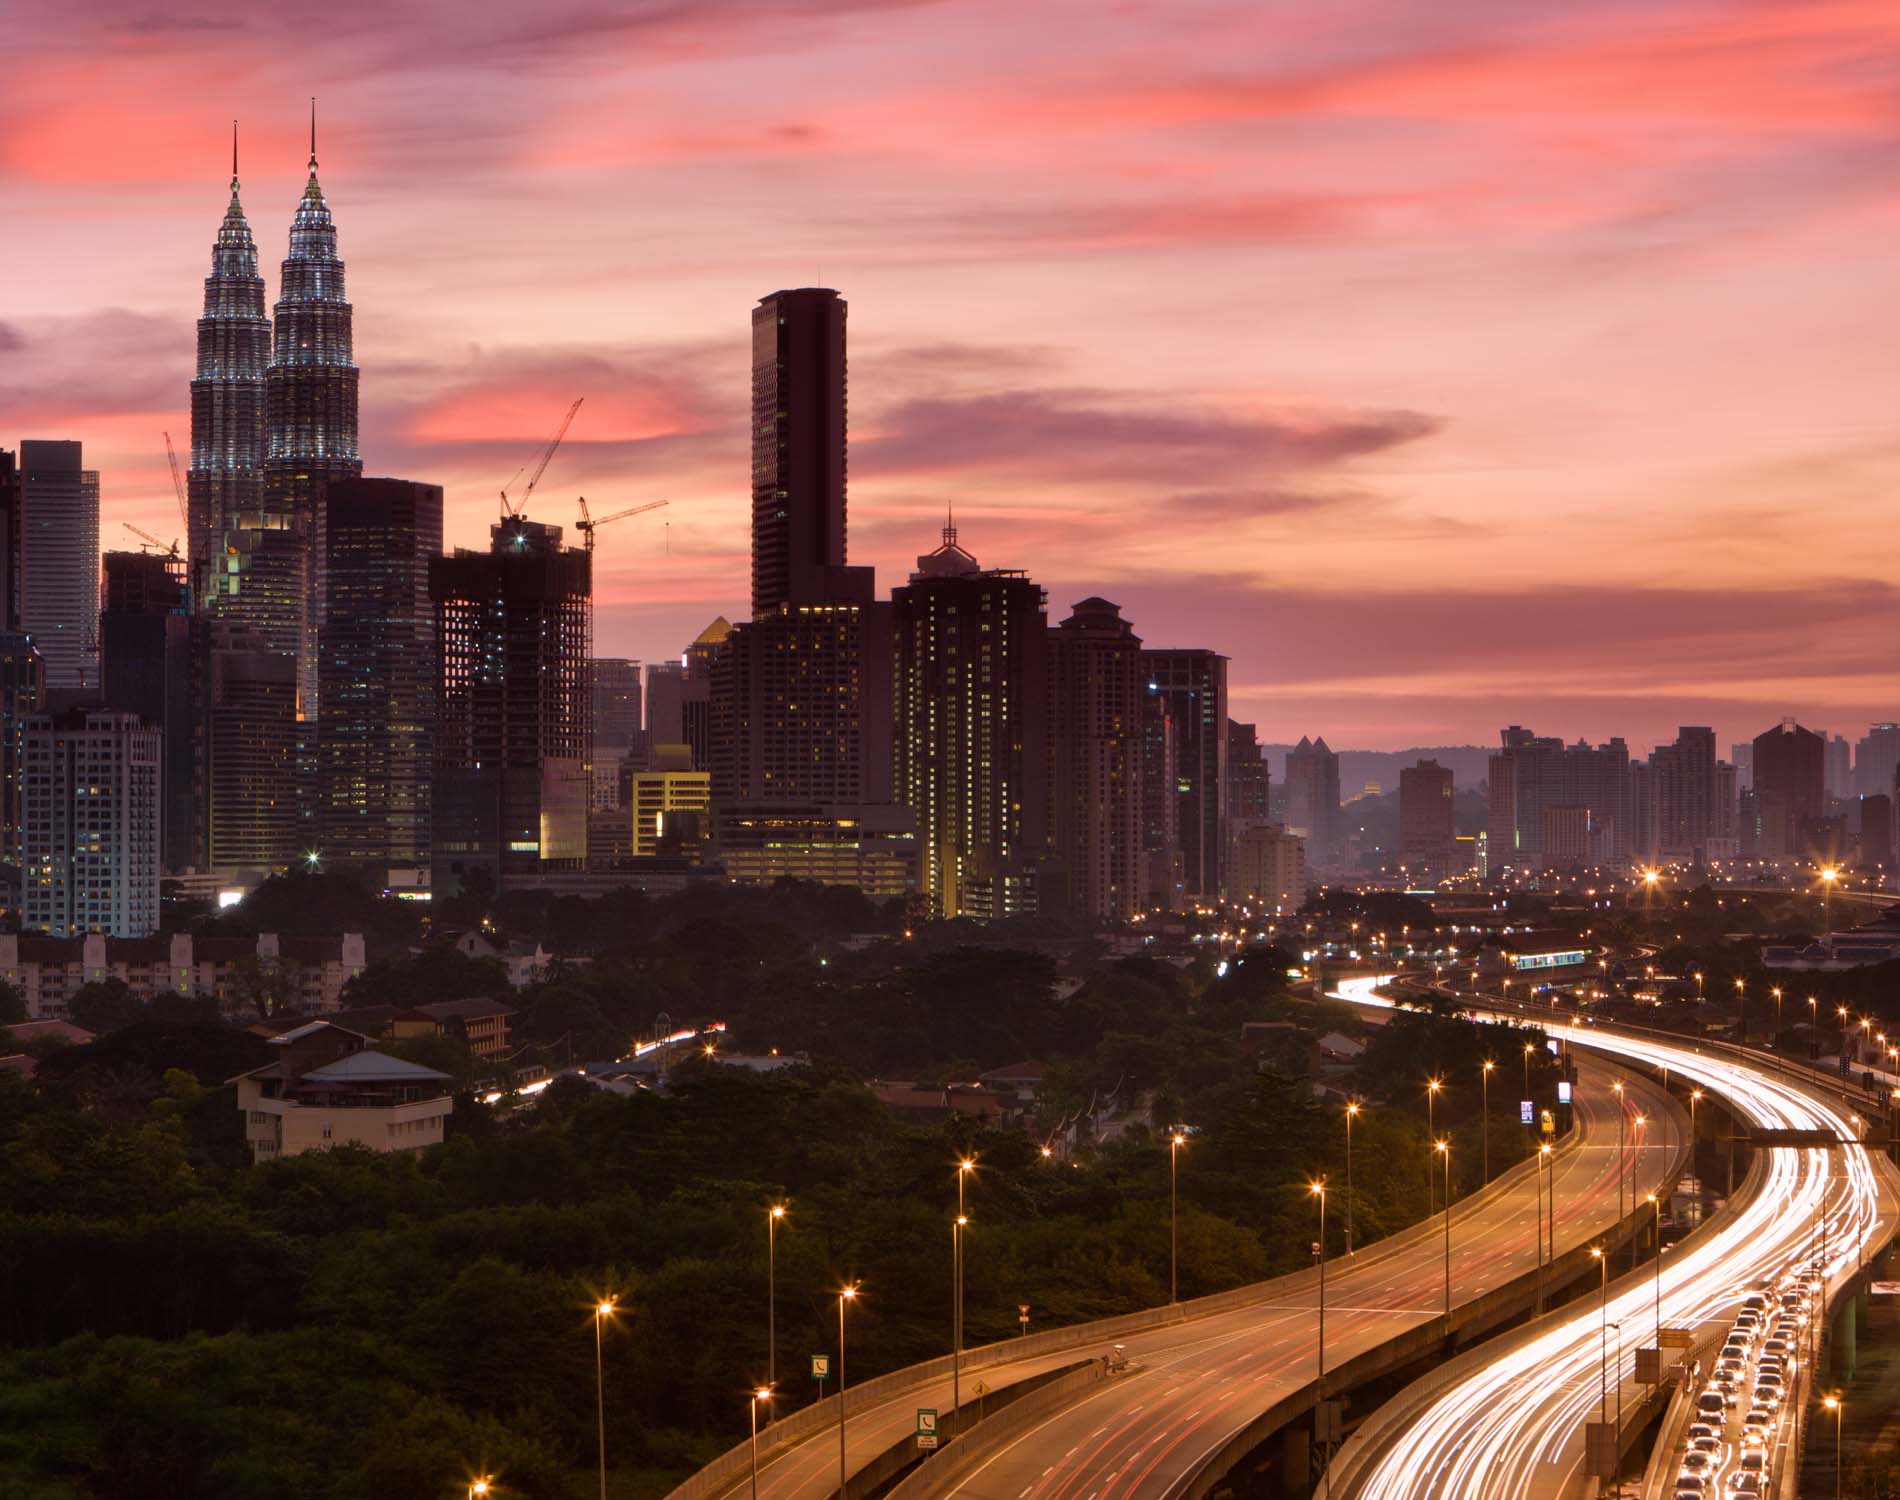 Sunset over Kuala Lumpur